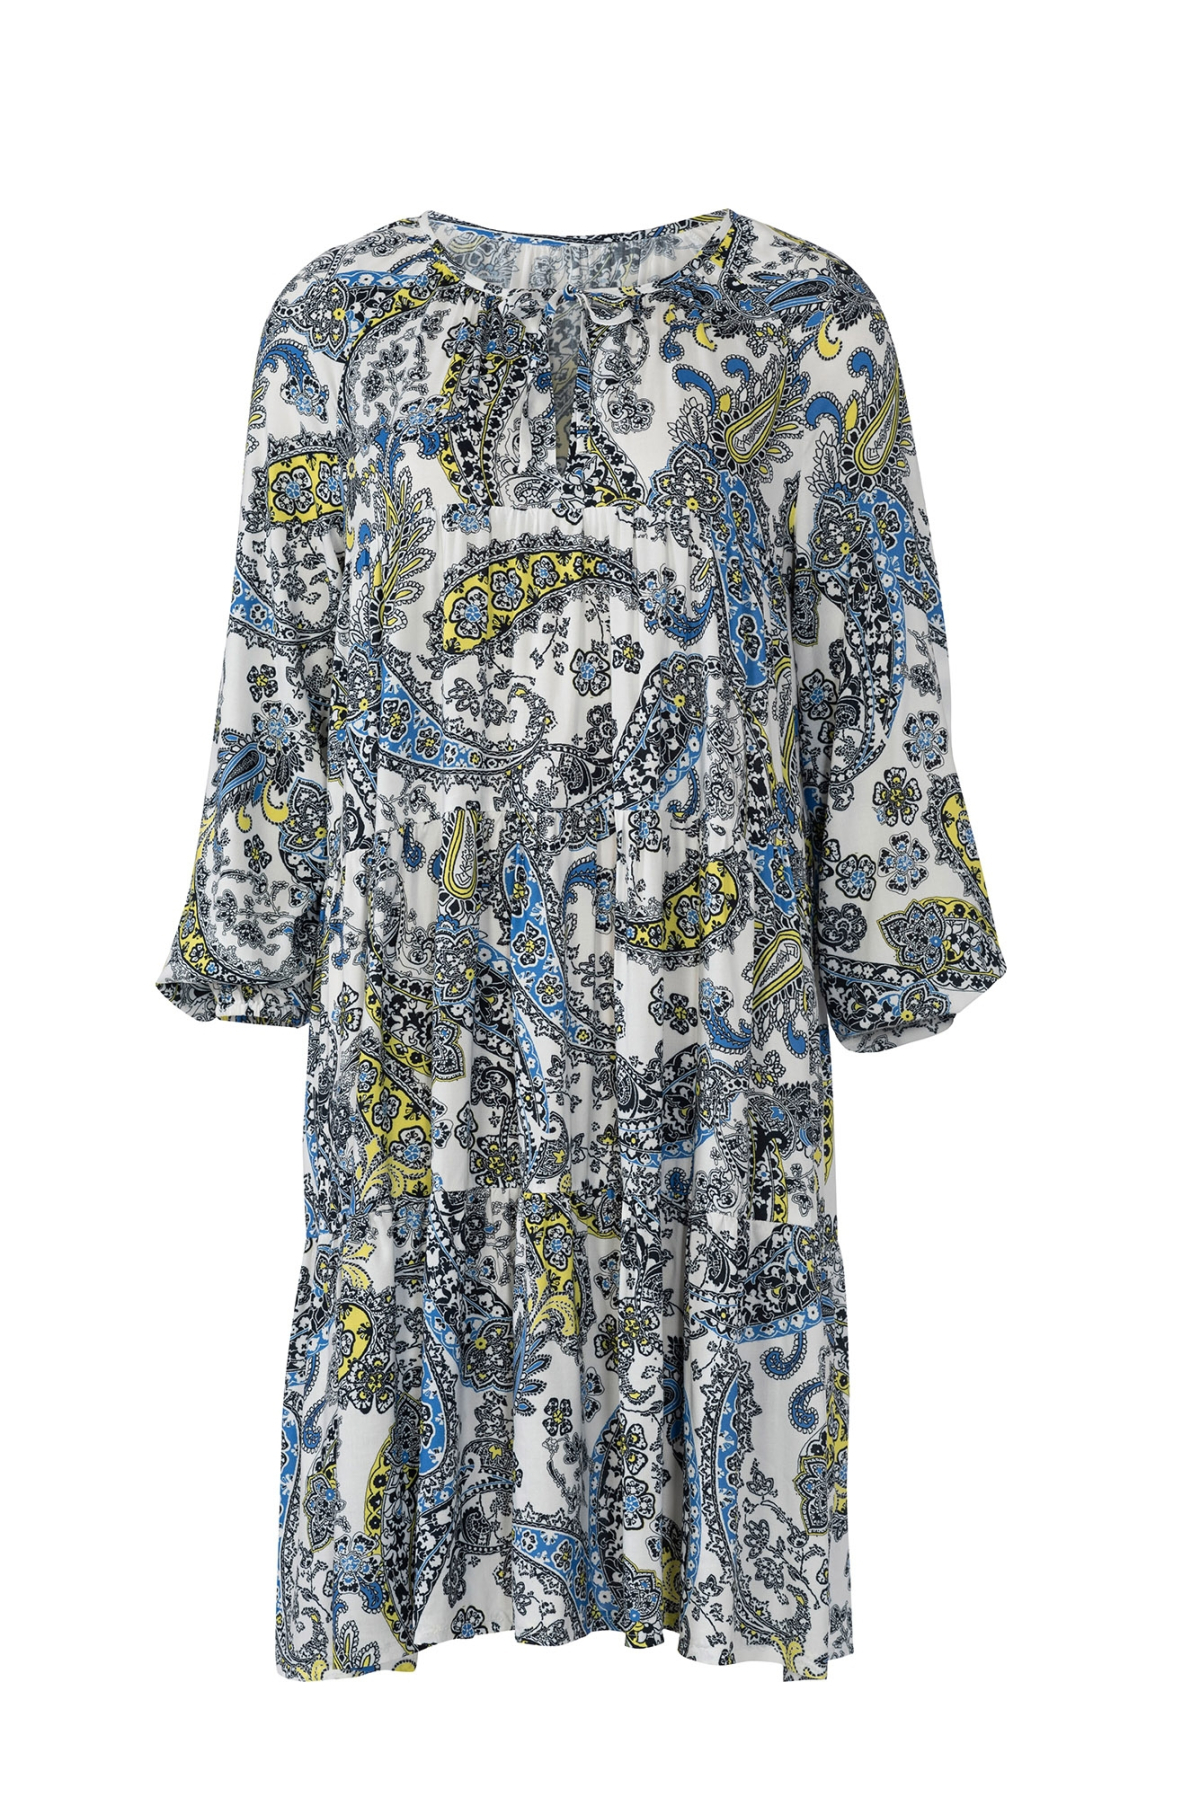 Origineel Frustrerend hetzelfde Pattern blouse en jurk, Burda 6002 | Stoffen Hemmers